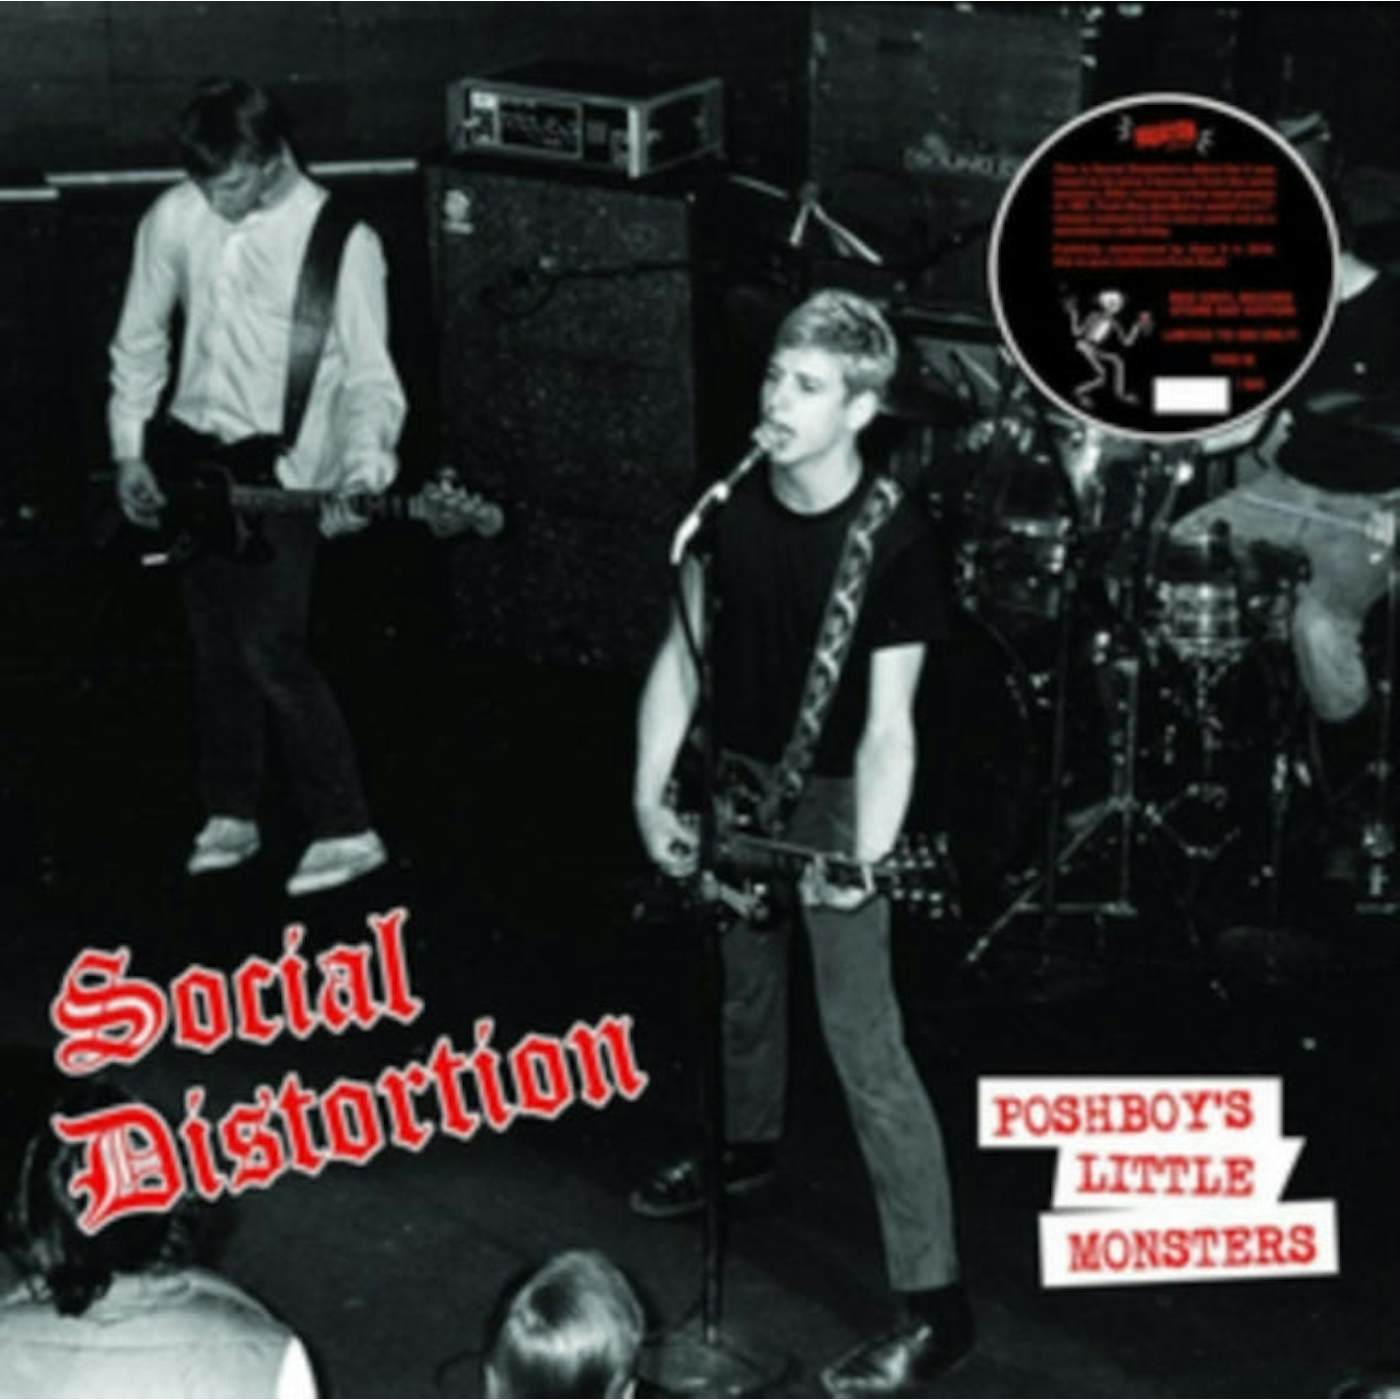 Social Distortion LP Vinyl Record - Poshboy's Little Monsters